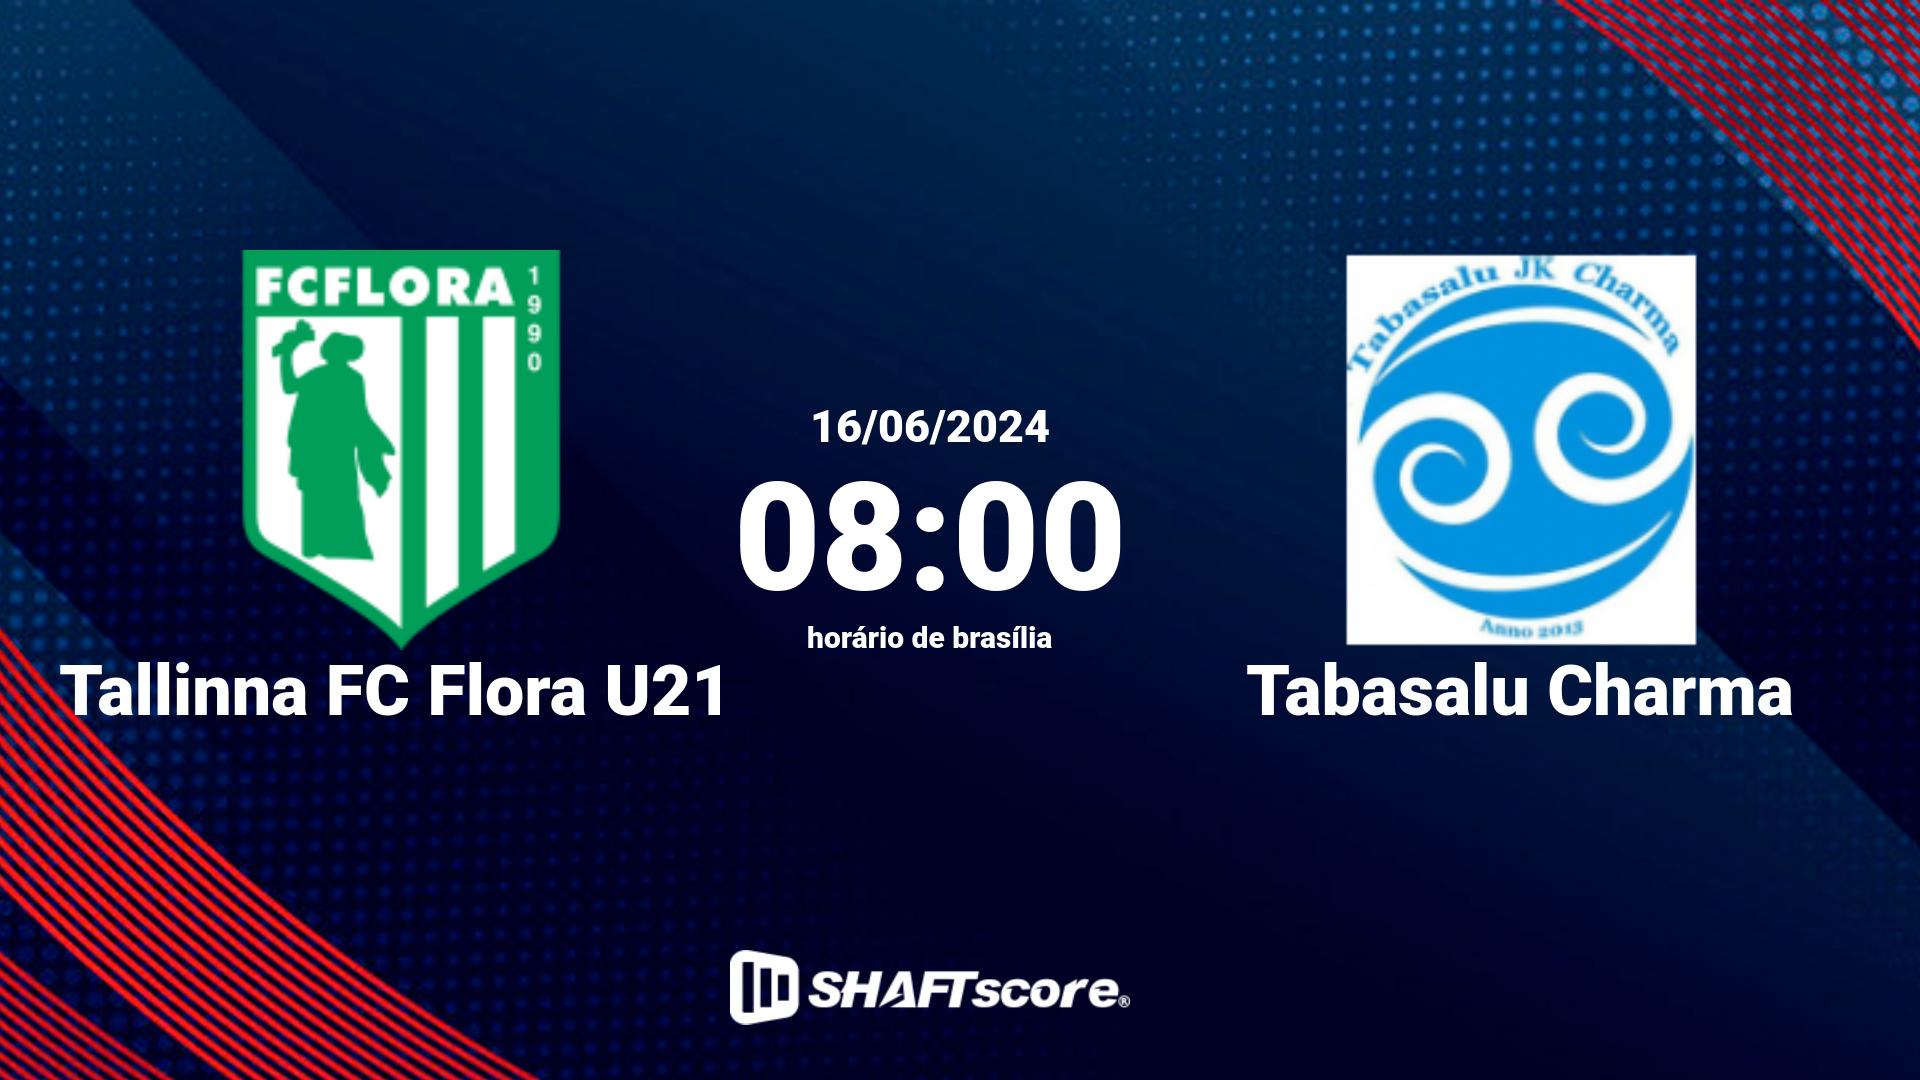 Estatísticas do jogo Tallinna FC Flora U21 vs Tabasalu Charma 16.06 08:00